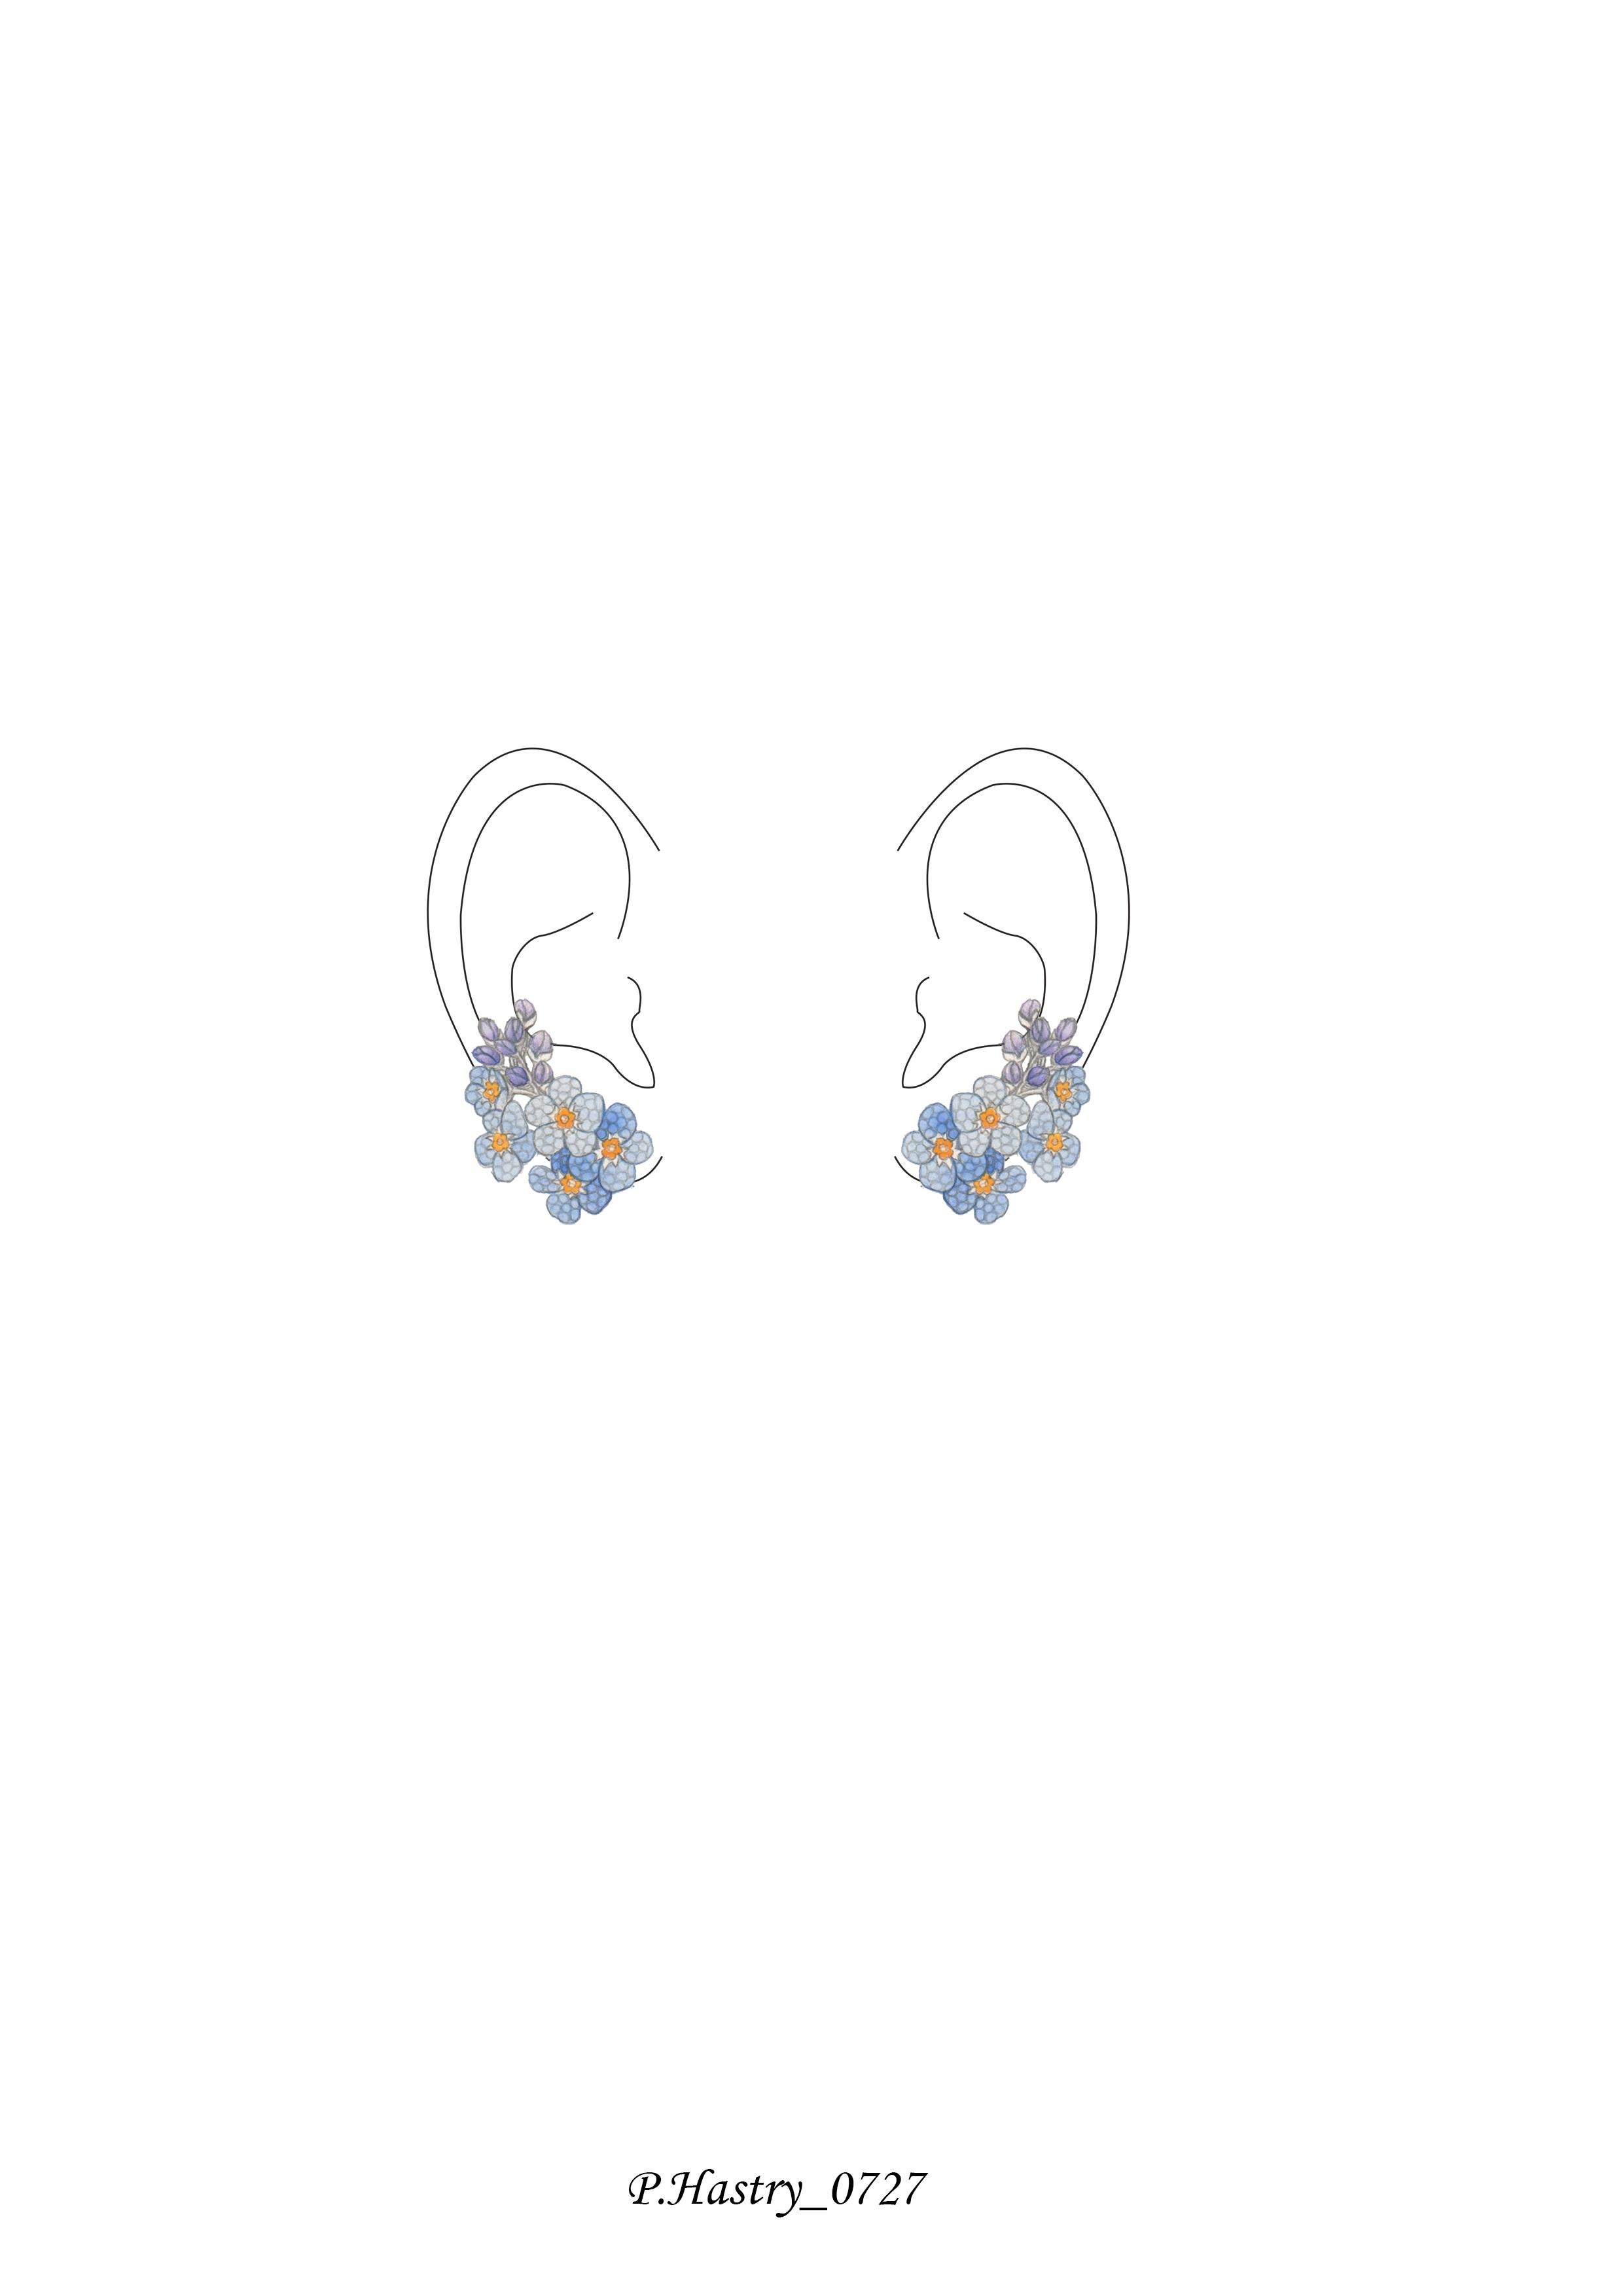 Brilliant Cut Flower Cluster Earrings - 18k Gold, Blue Sapphires, Amethyst, Topaz For Sale